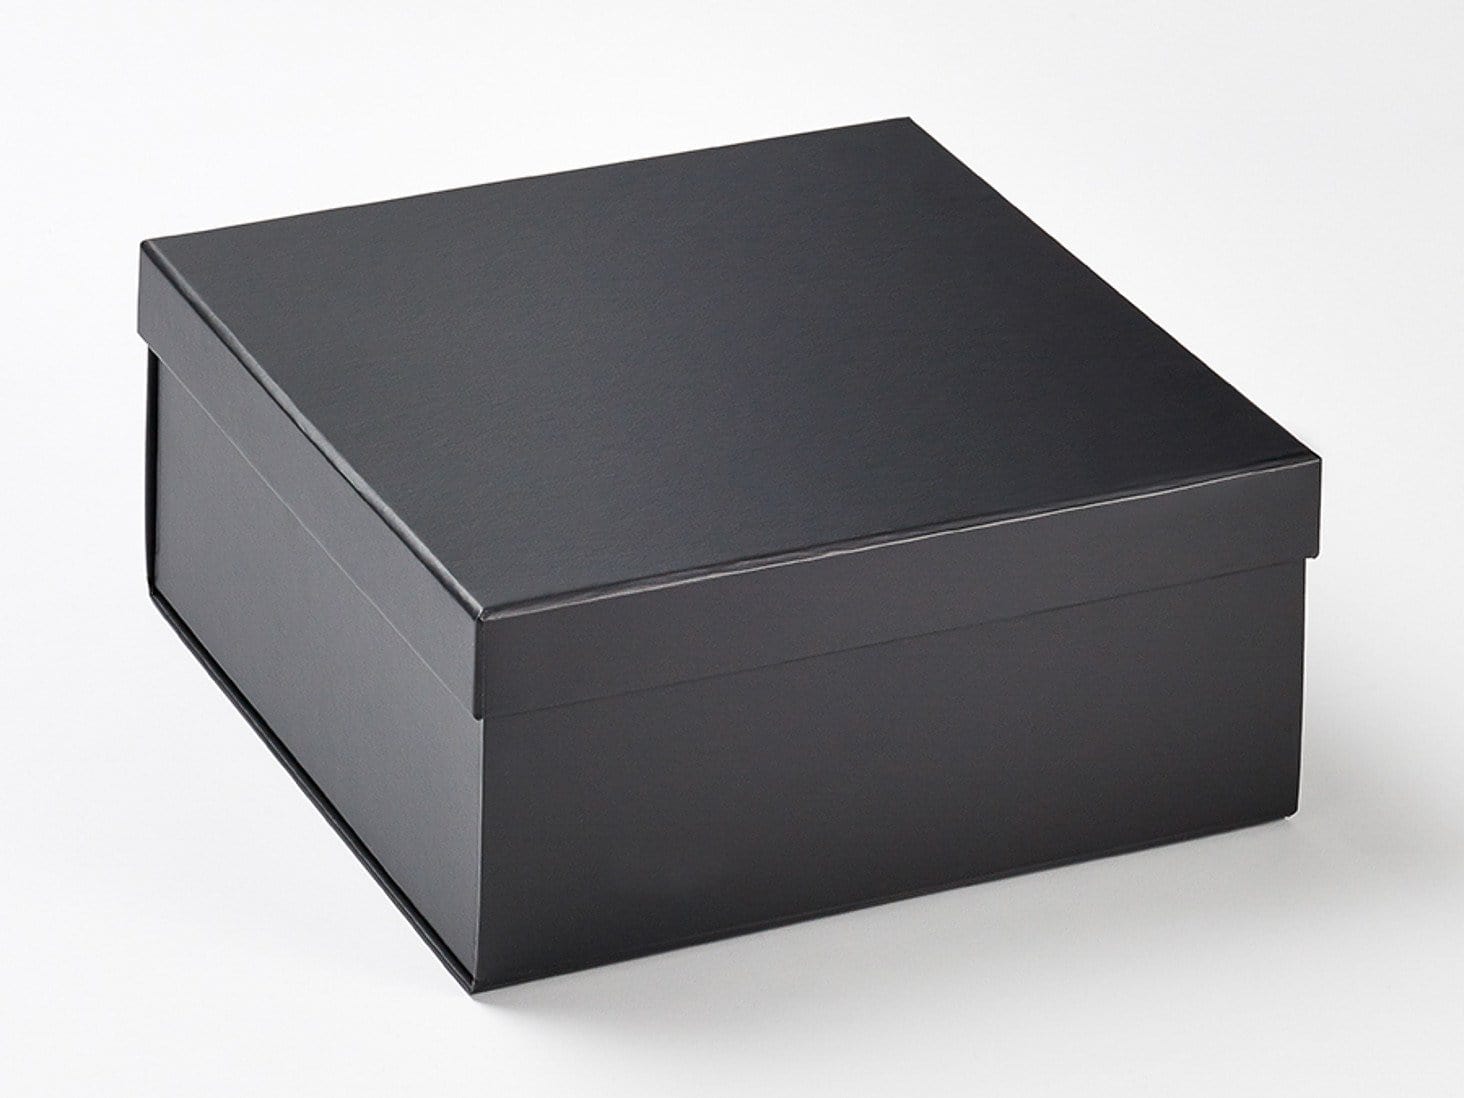 Black Medium Lift Off Lid Gift Box with Lid Assembled from Foldabox